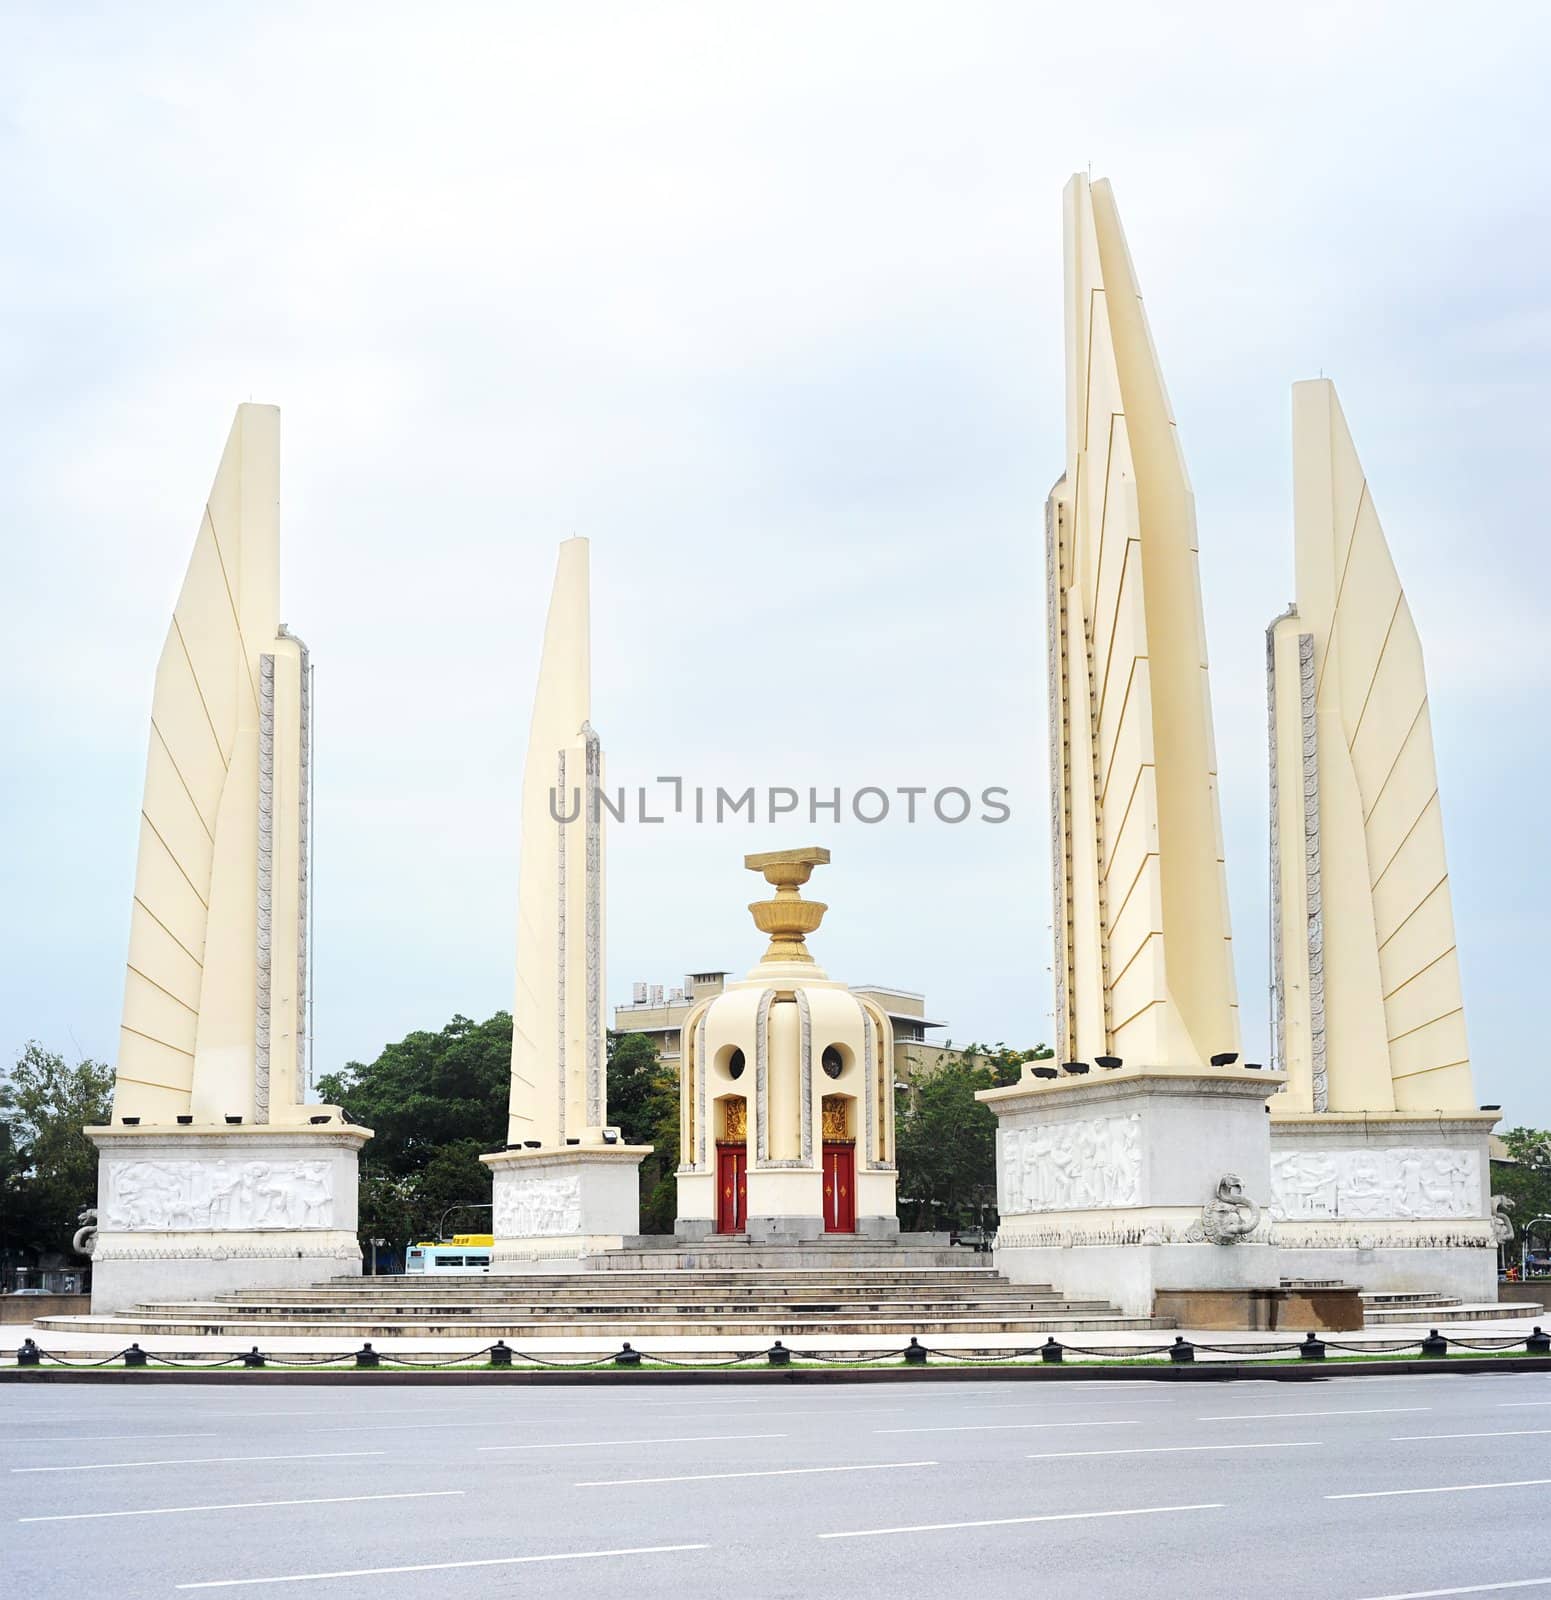 The Democracy Monument (Thai: Anusawari Prachathipatai) is  a public monument in the centre of Bangkok, capital of Thailand